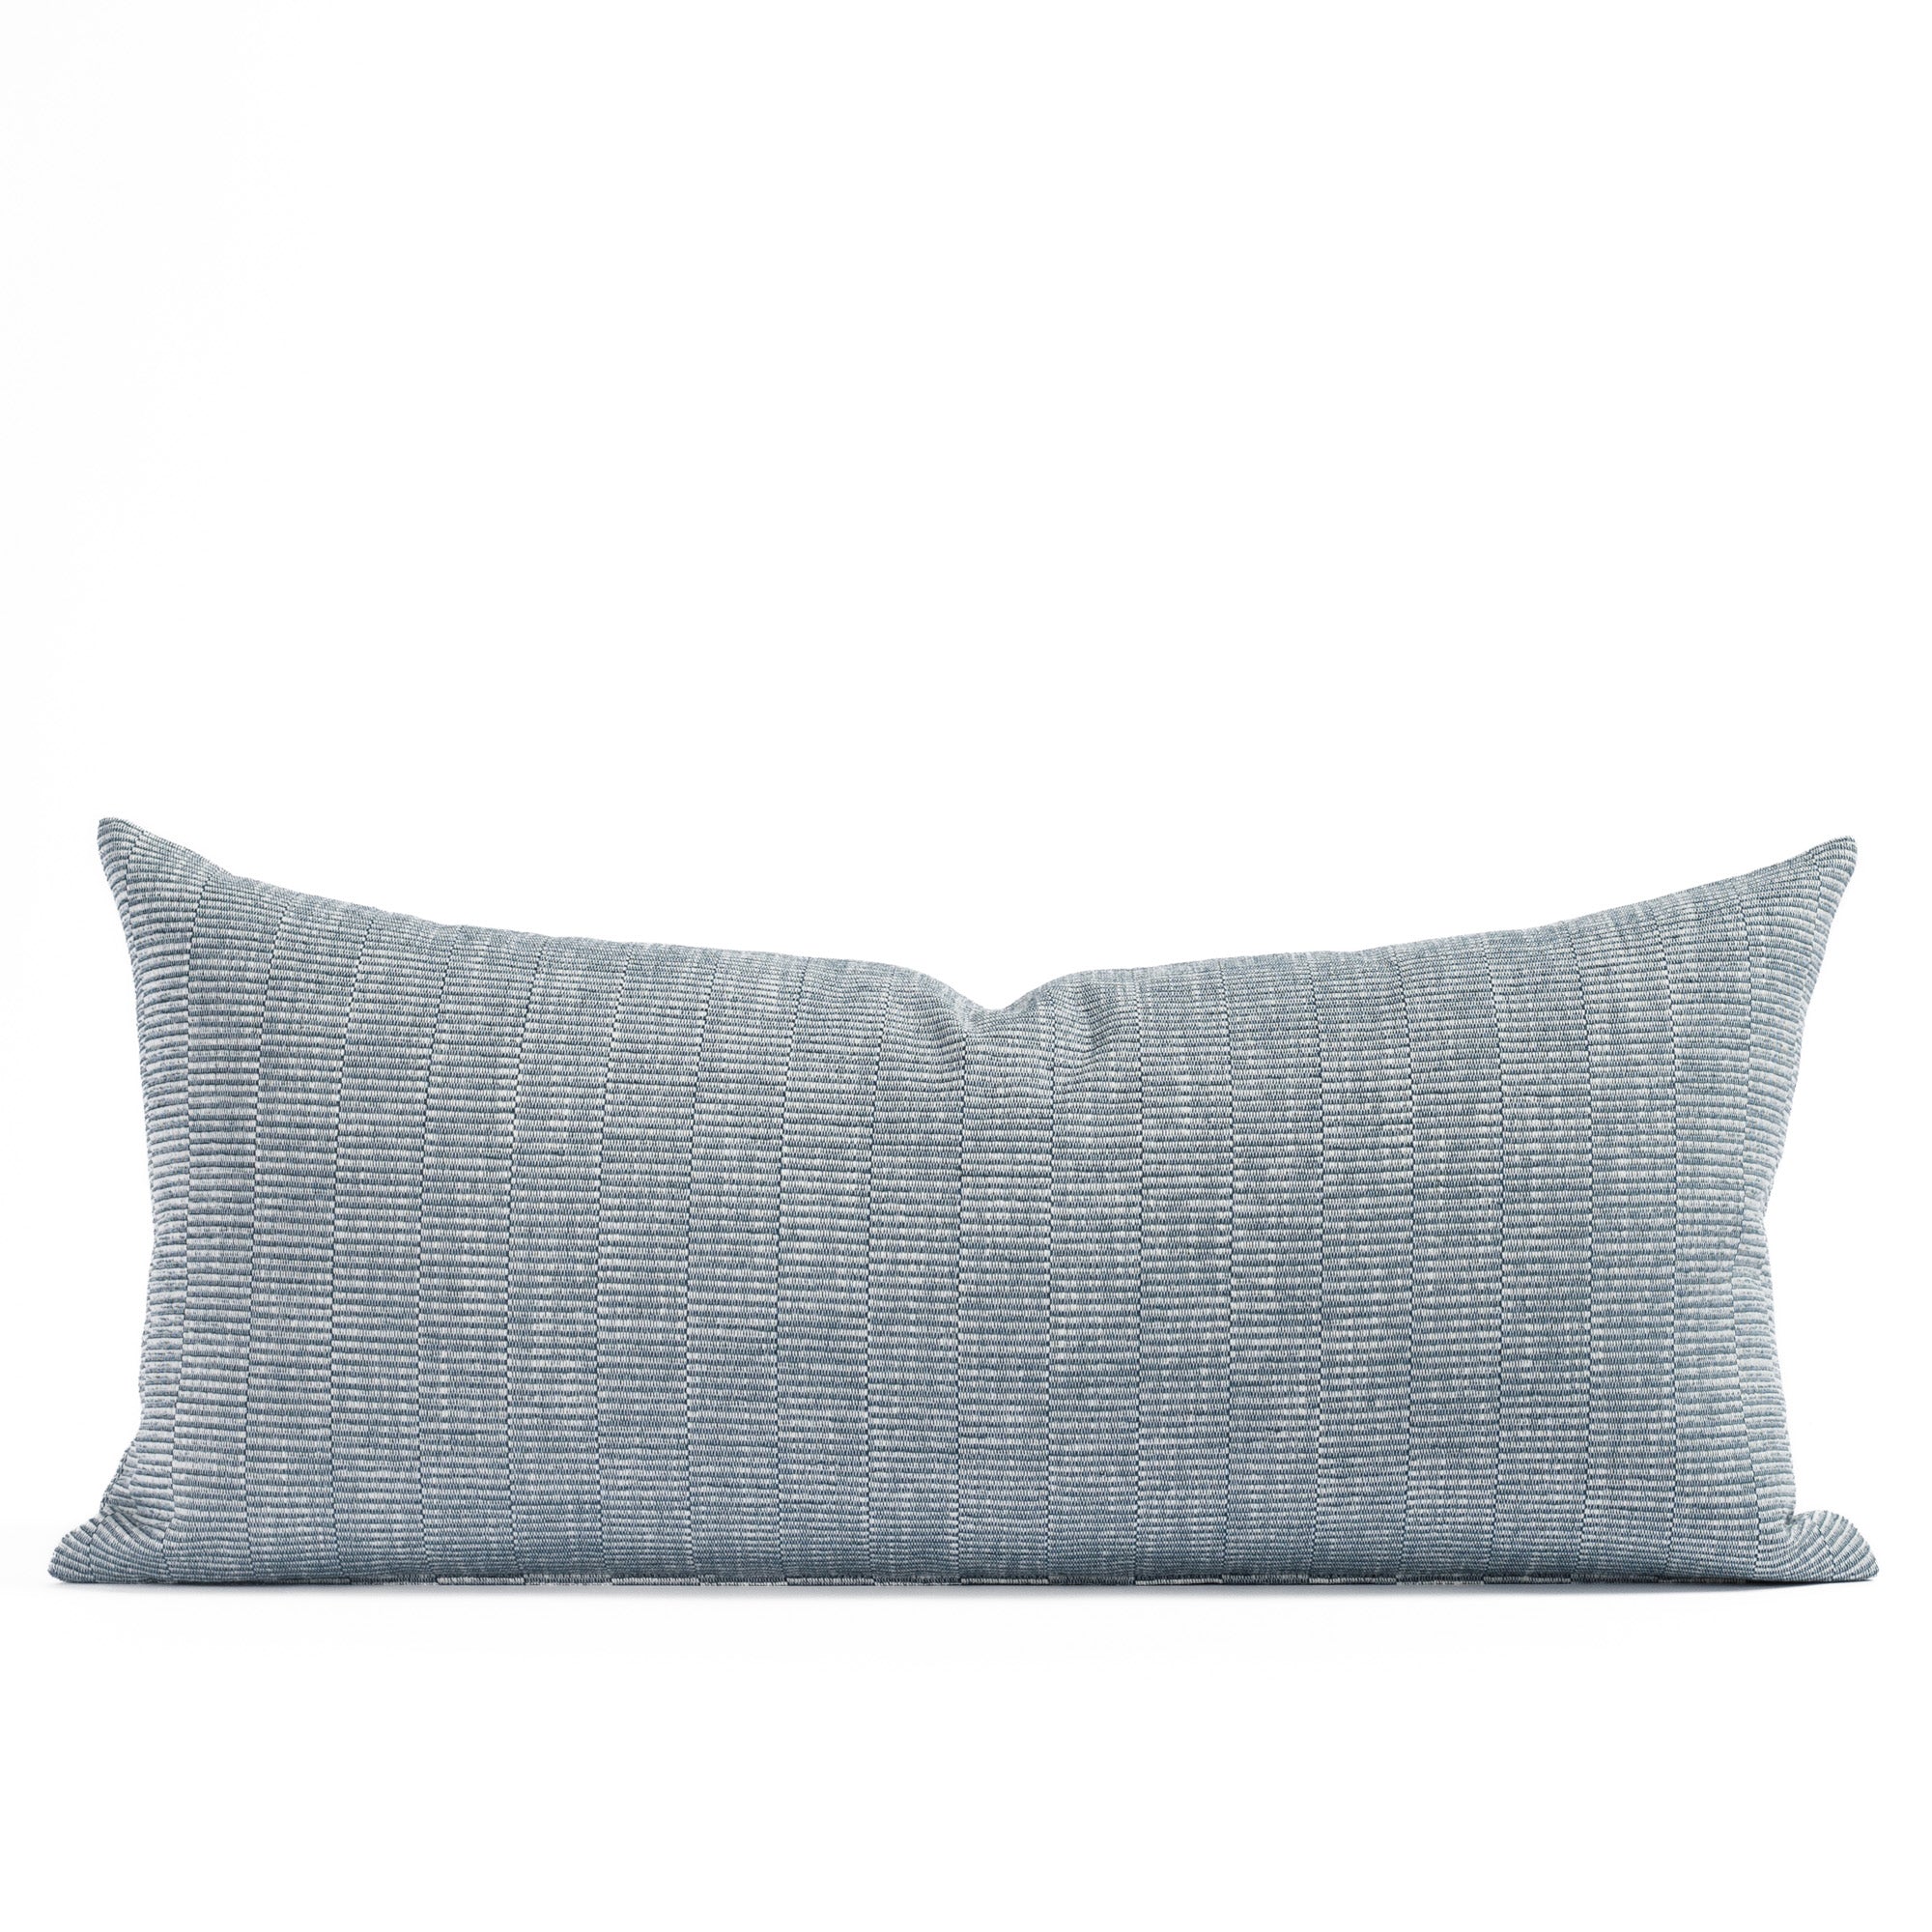 Lane 15x32 XL lumbar pillow Chambray, a blue and white textured stripe extra long lumbar throw pillow from Tonic Living